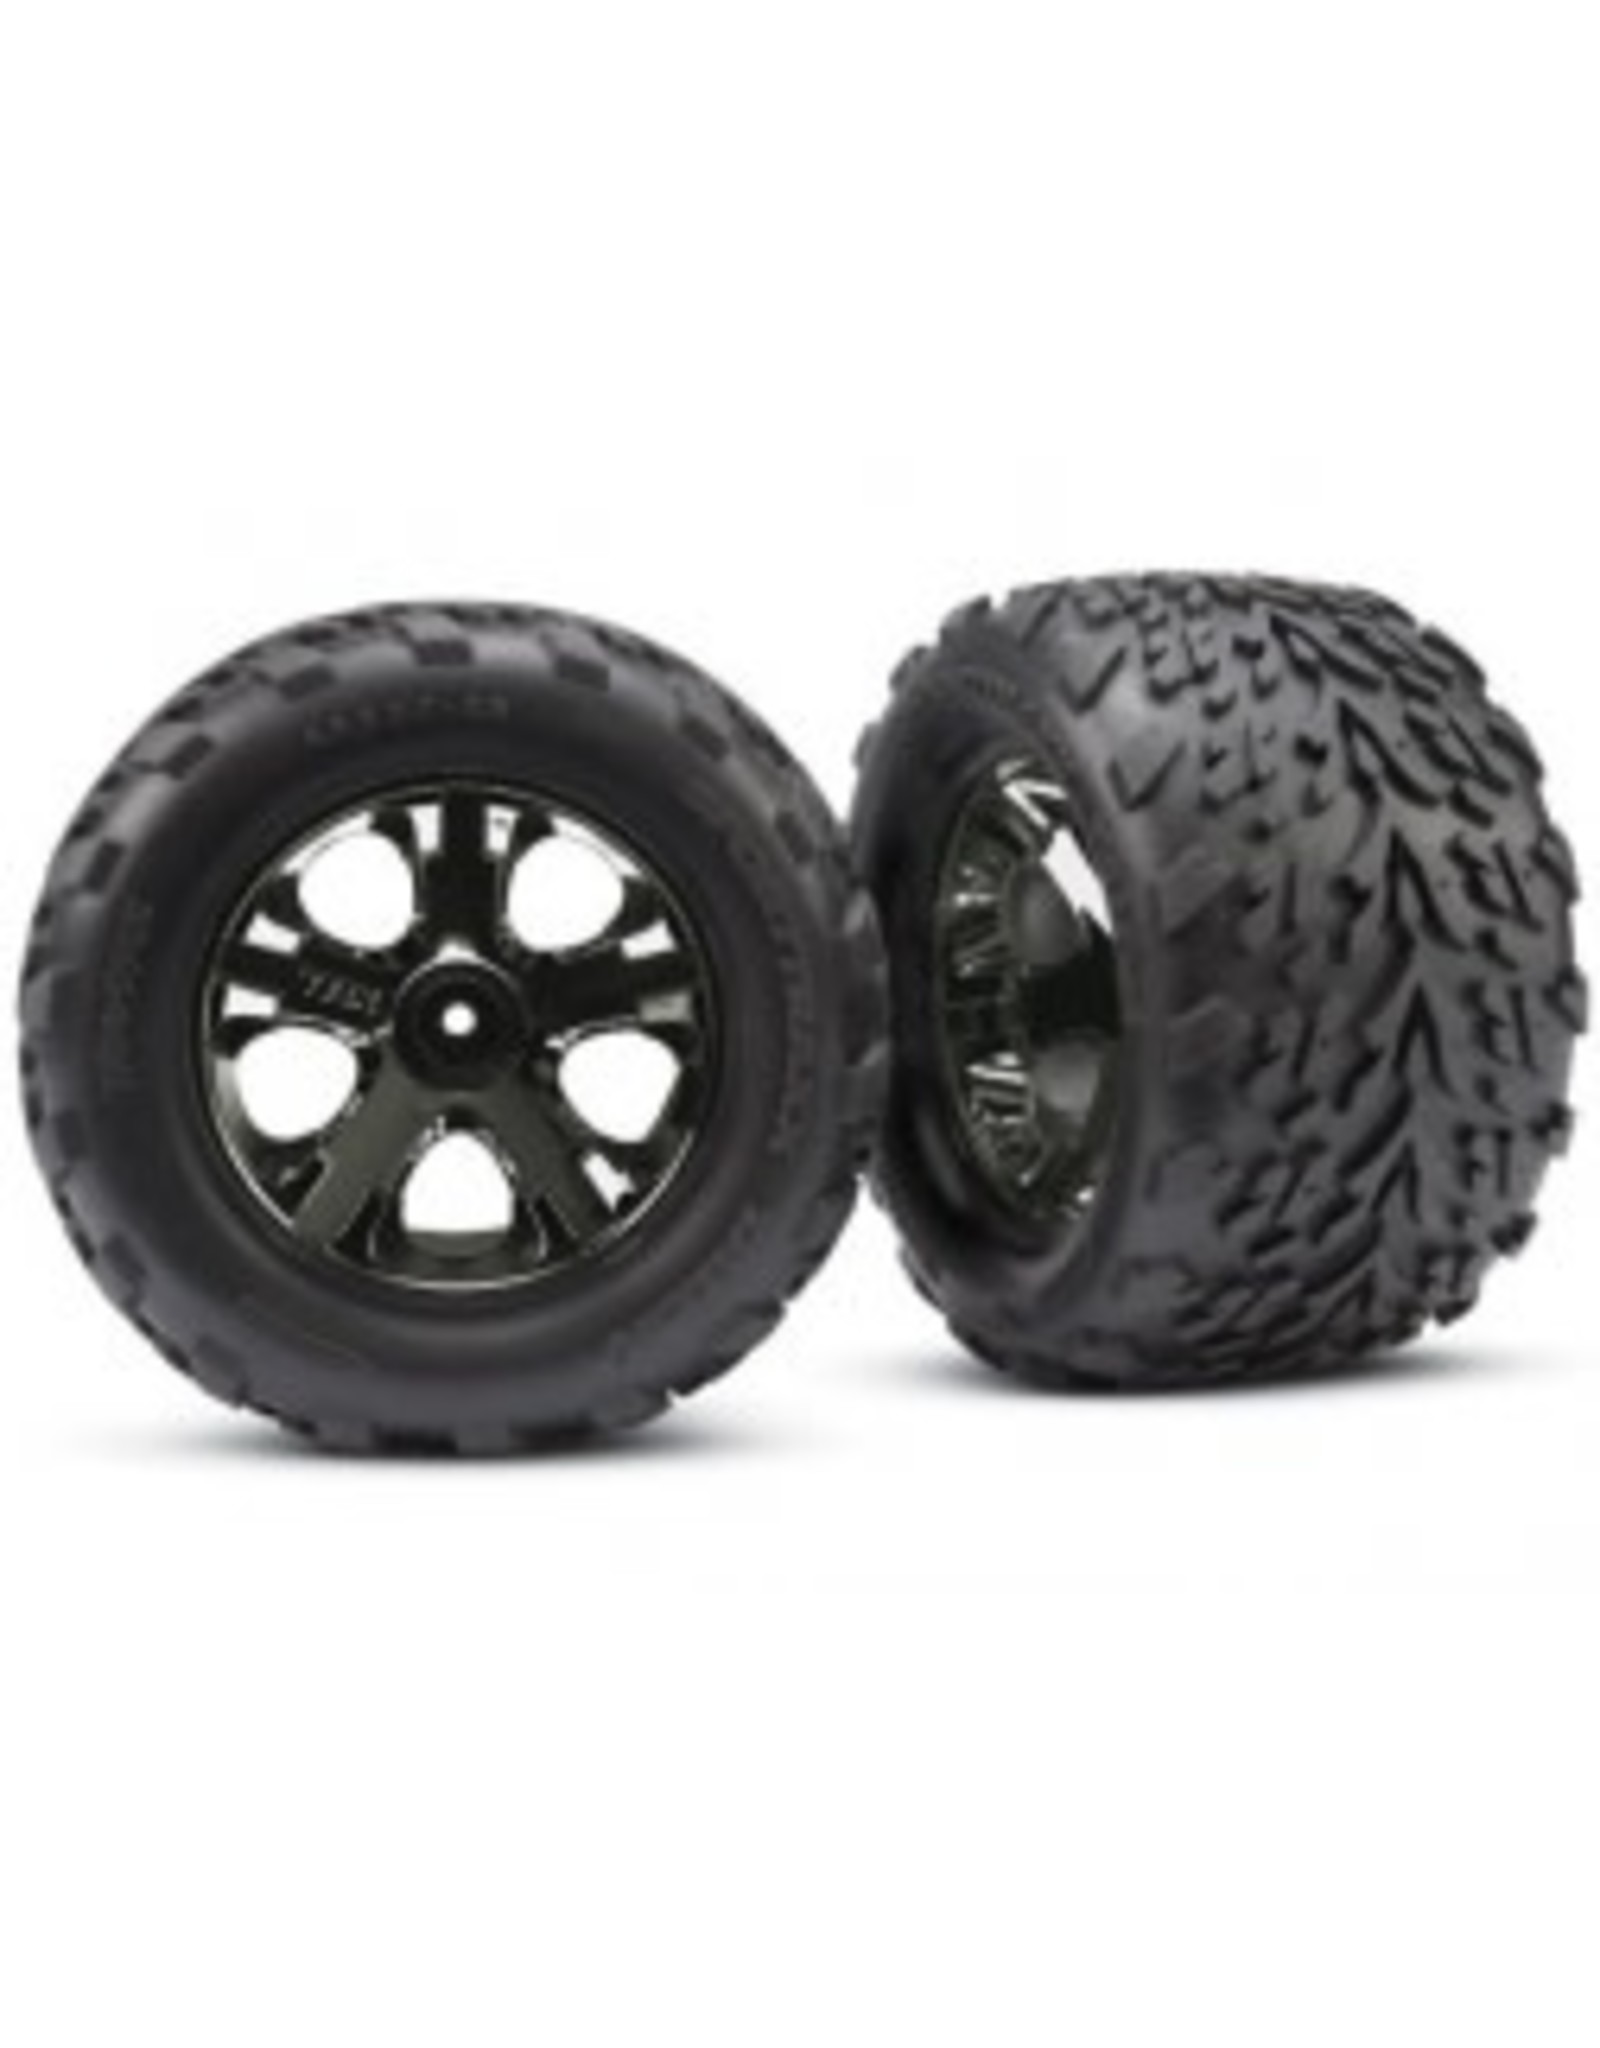 Traxxas Tires & wheels, assembled, glued (2.8") (All-Star black chrome wheels, Talon tires, foam inserts) (nitro rear/ electric front) (2) (TSM rated)